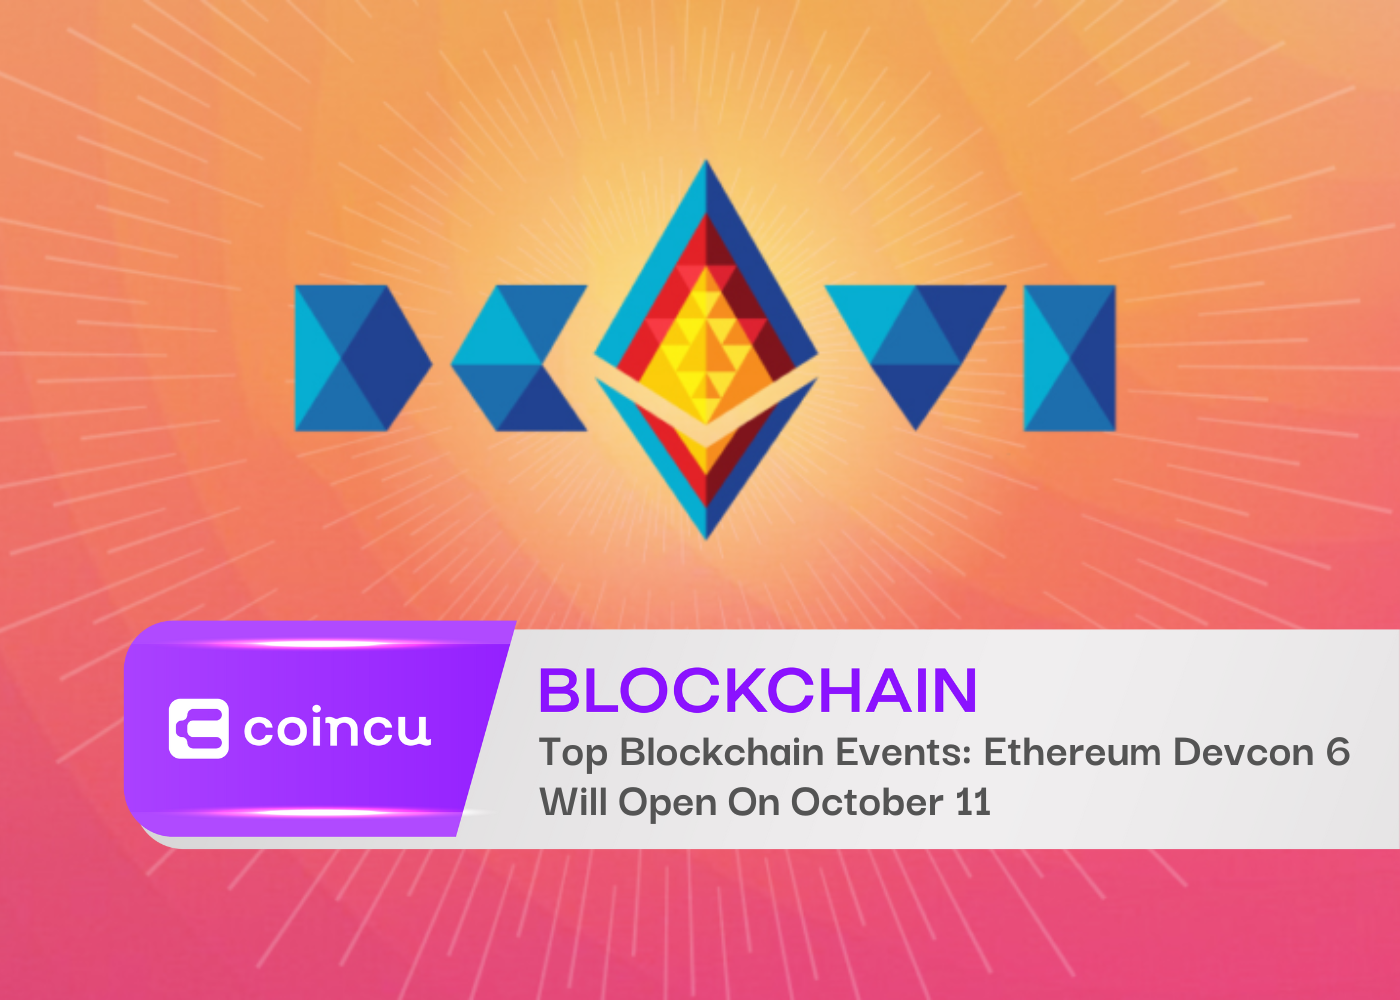 Top Blockchain Events: Ethereum Devcon 6 Will Open On October 11